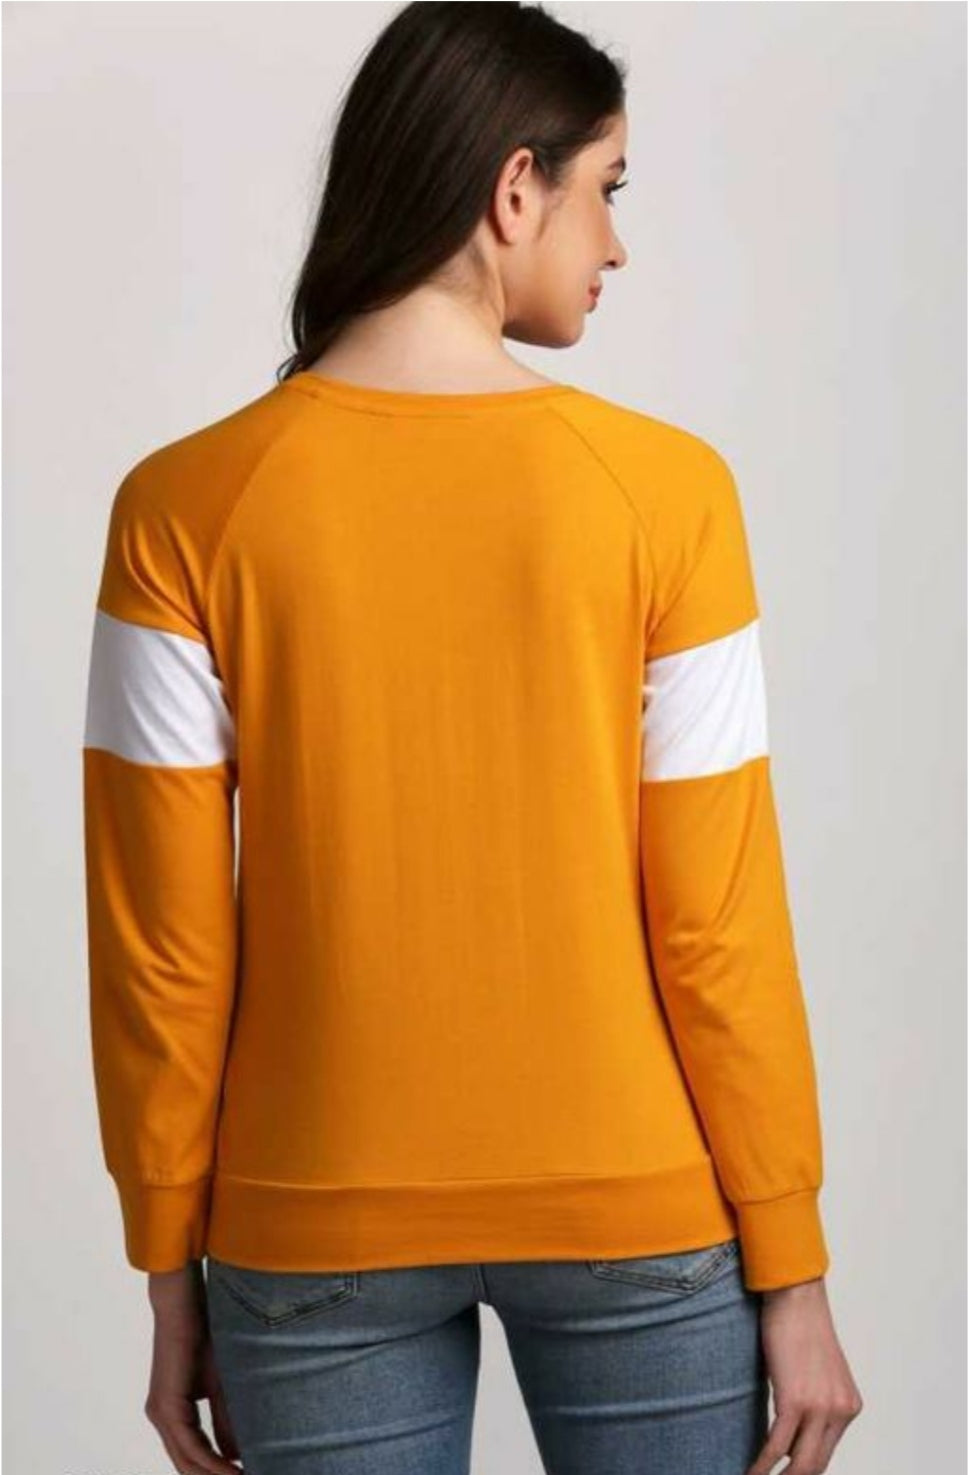 StyleIcon Full-Sleeves Tshirt For Women.